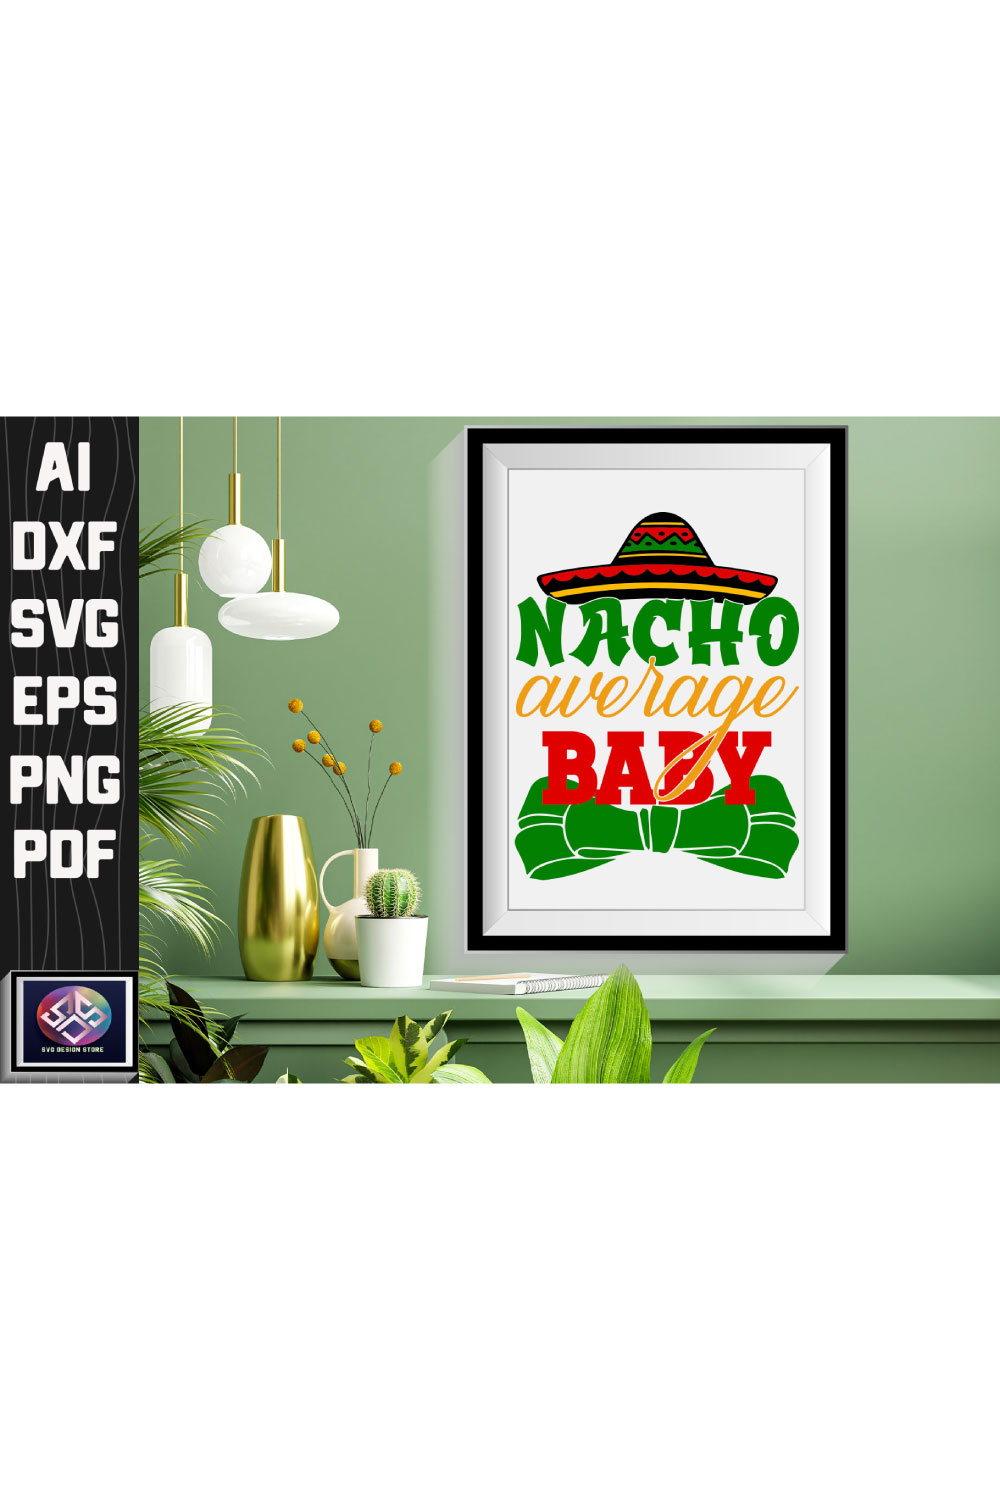 Nacho Average Baby pinterest preview image.